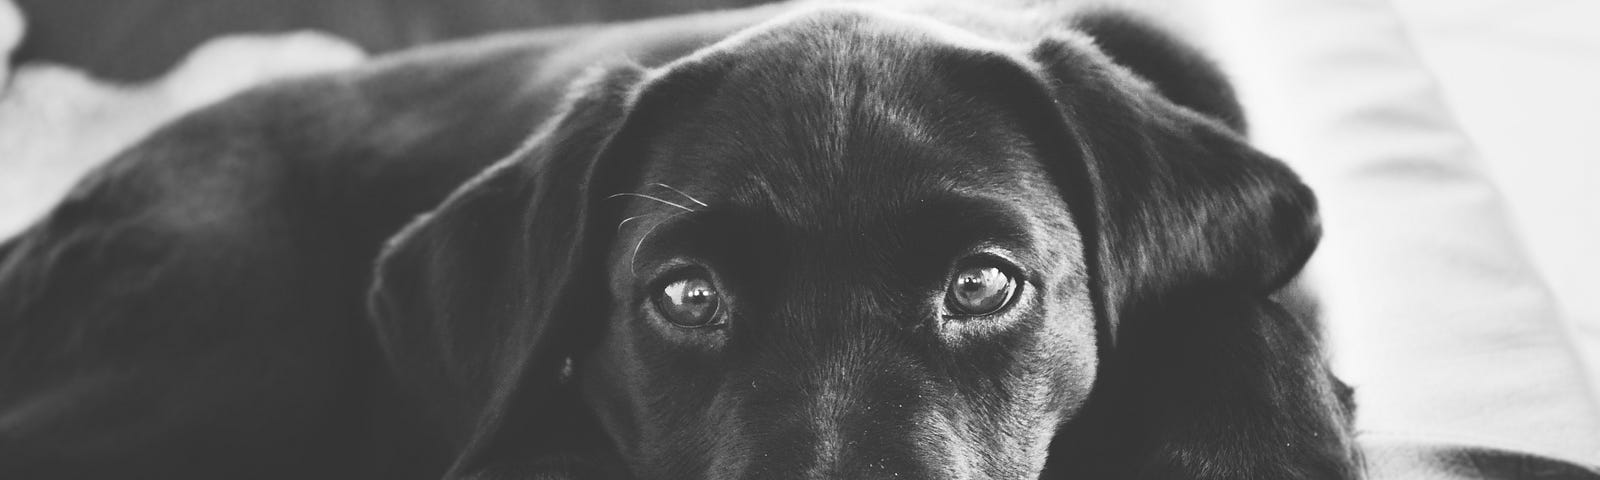 Black lab puppy with sad expression